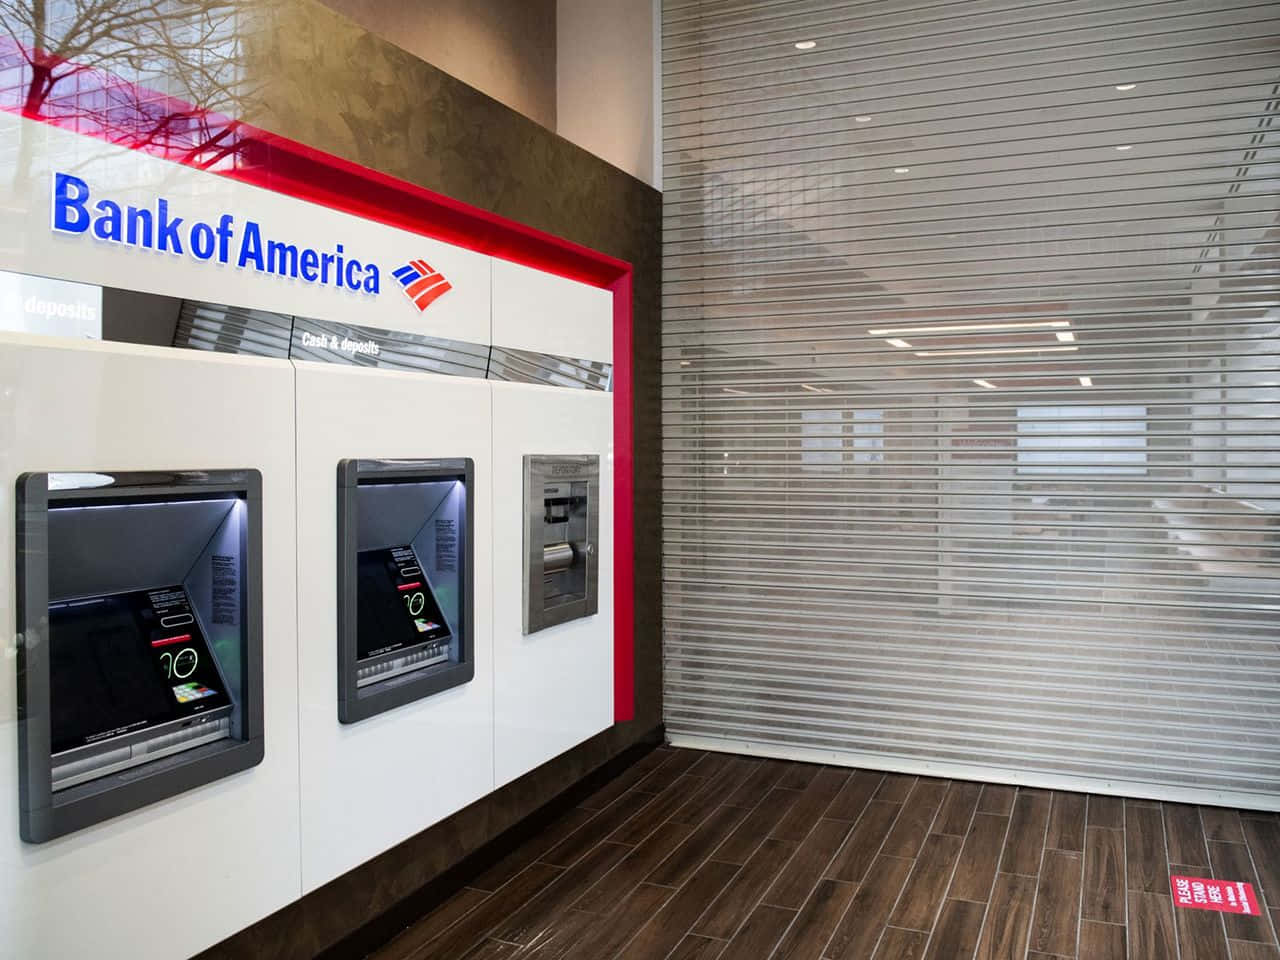 Bankof America: Offrendo Soluzioni Finanziarie Per I Proprietari Di Casa.